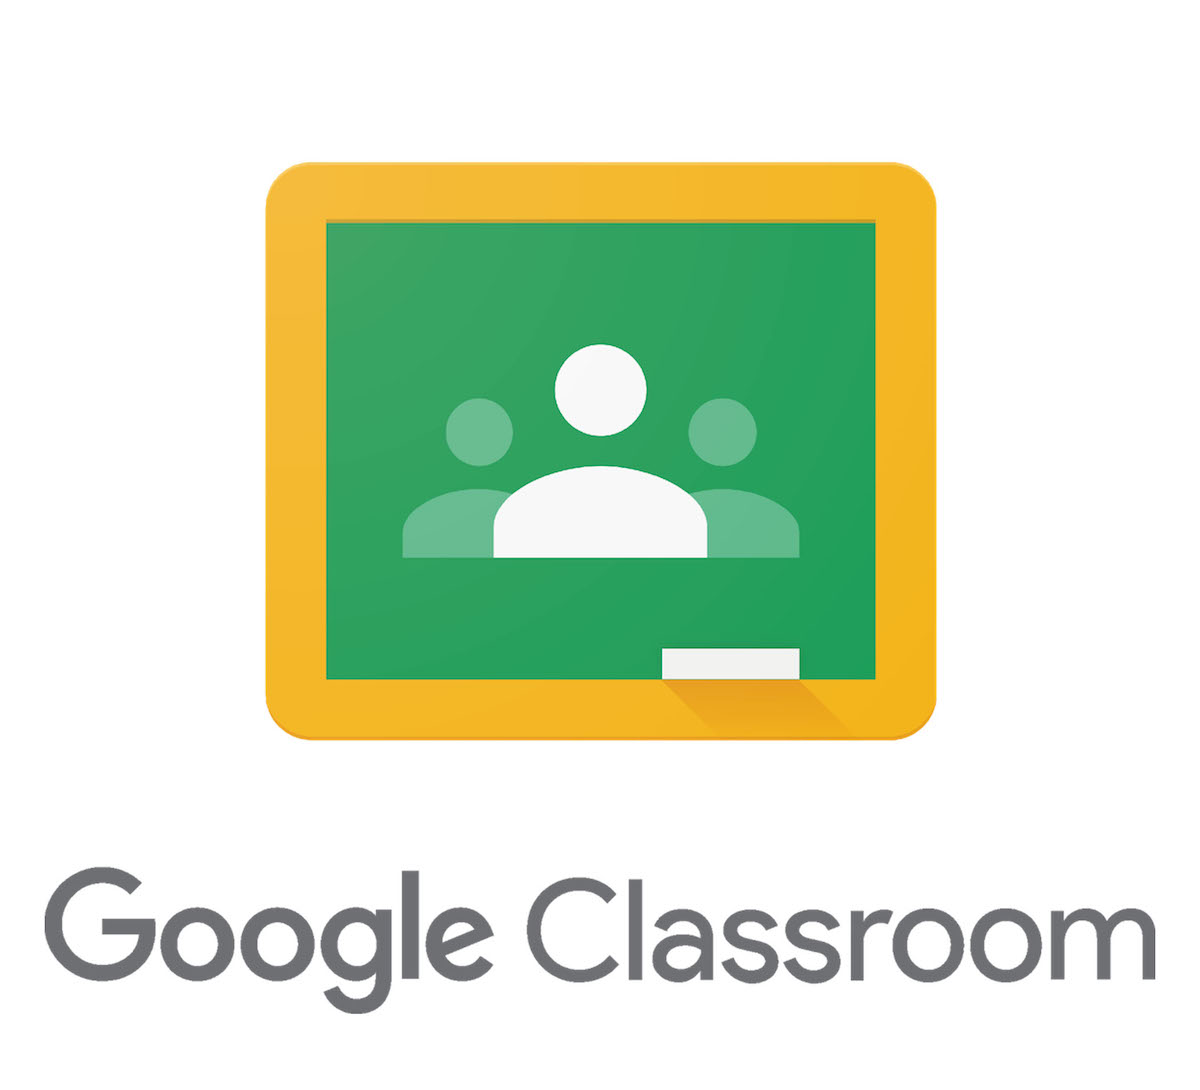 Google Classroom logo.